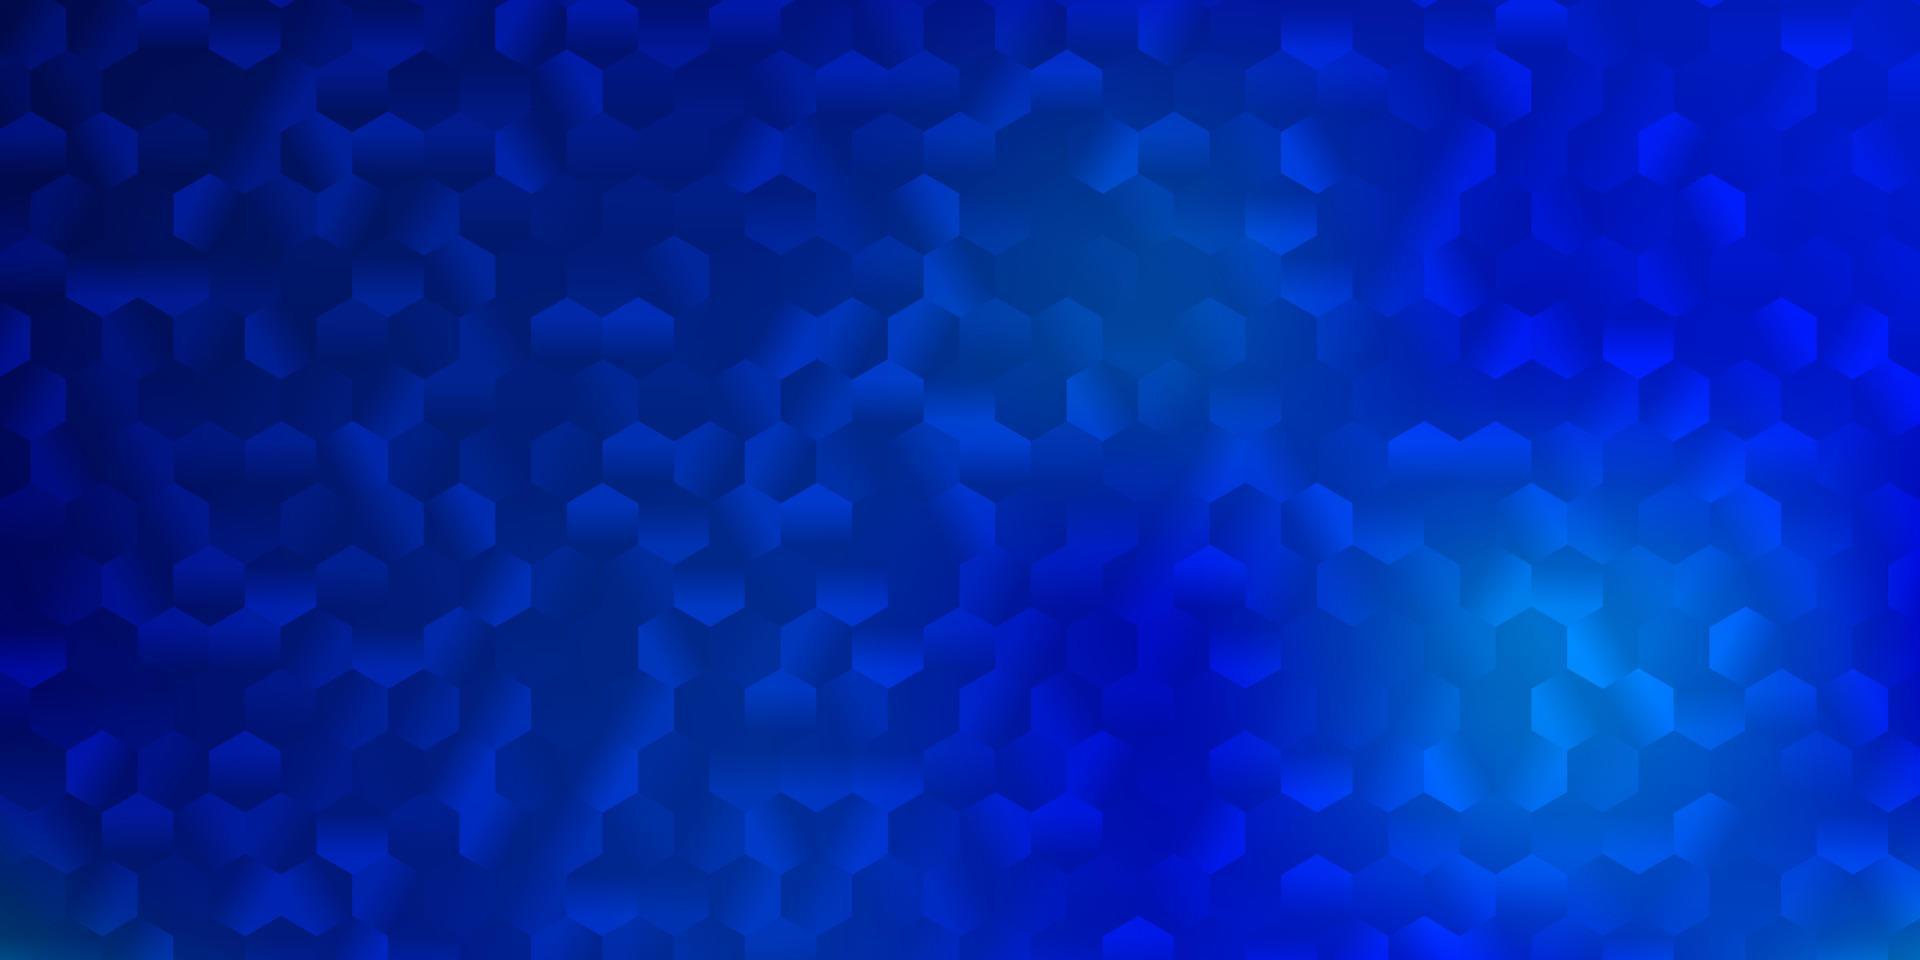 patrón de vector azul claro con hexágonos.